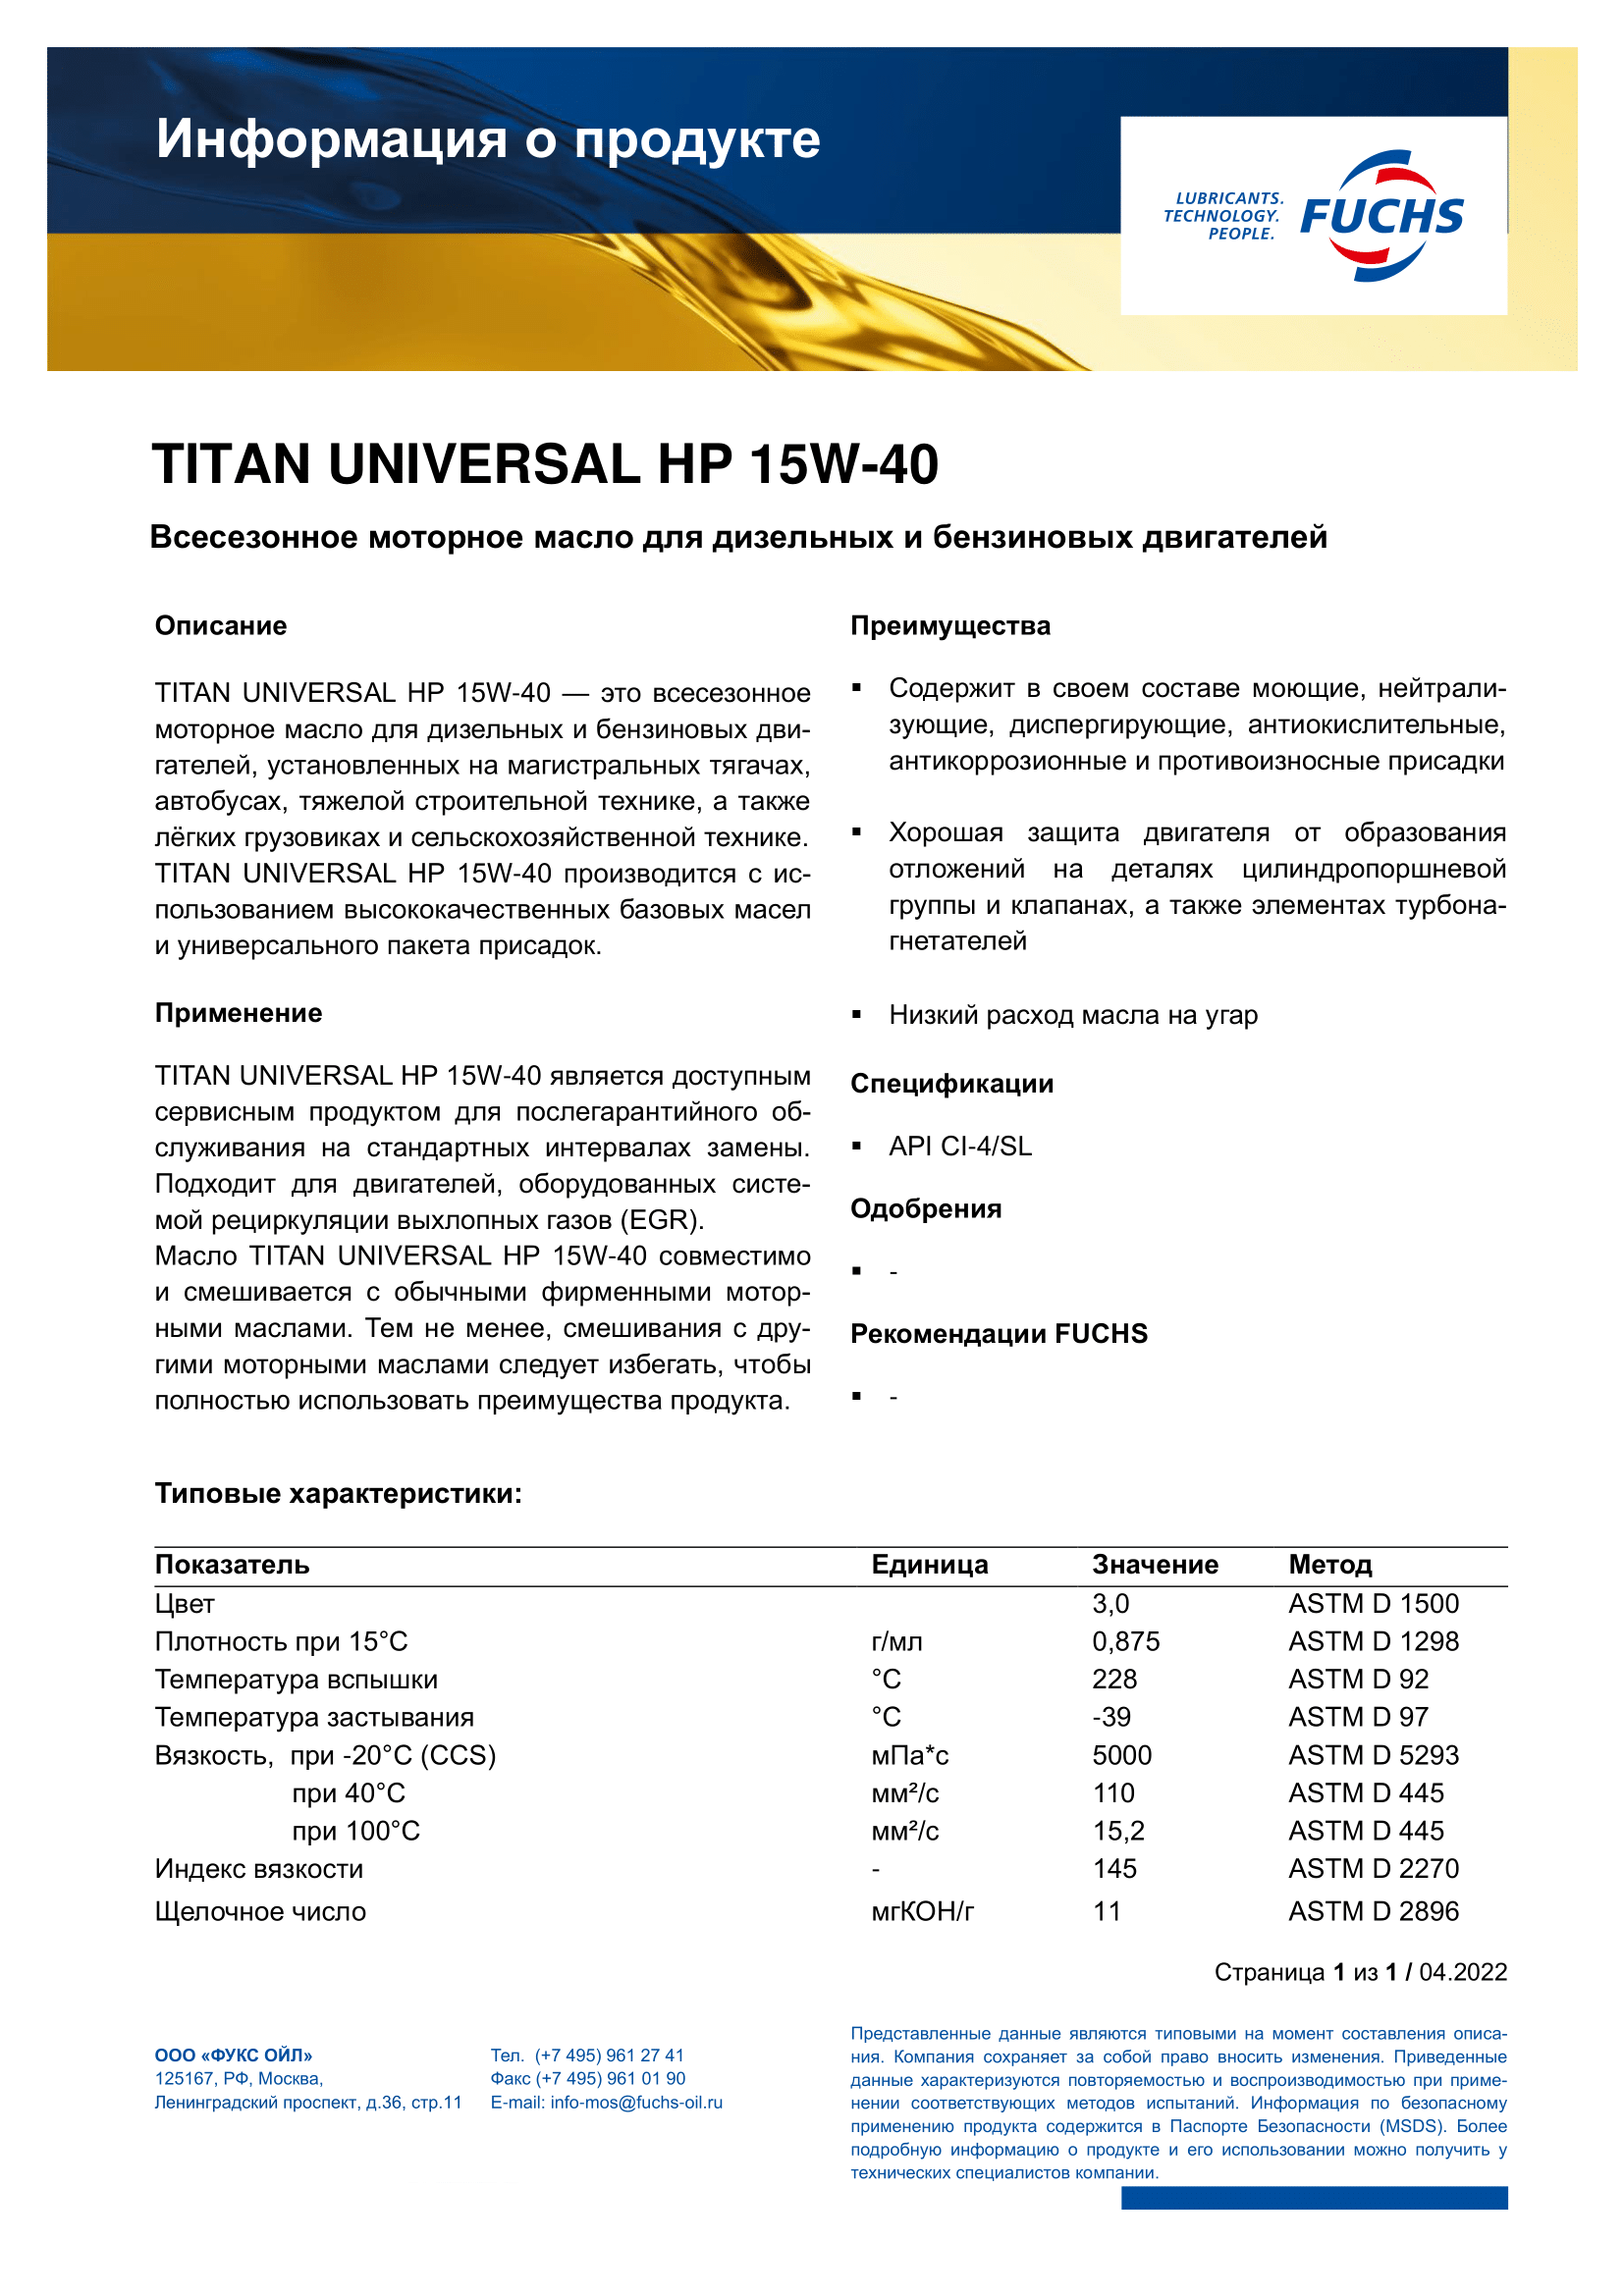 TITAN UNIVERSAL HP 15W-40